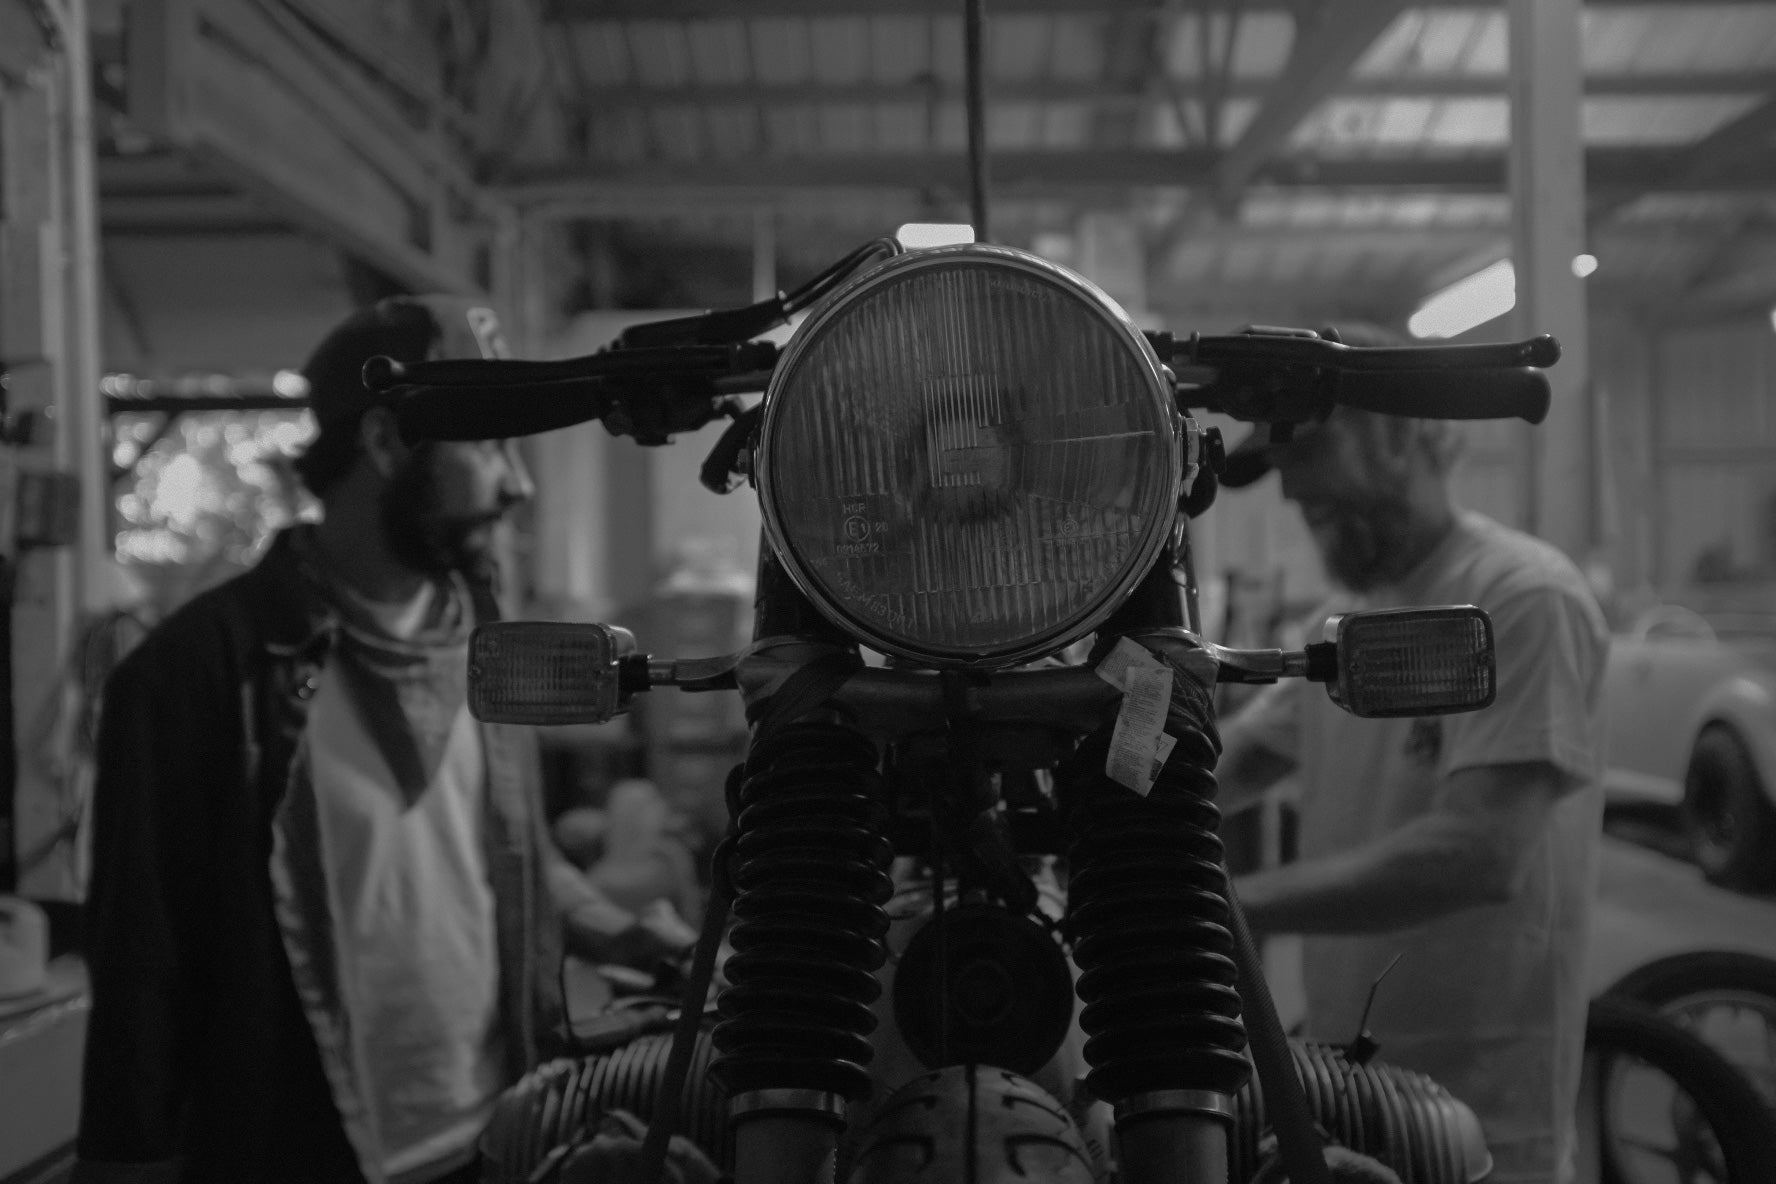 Custom Motorcycle parts